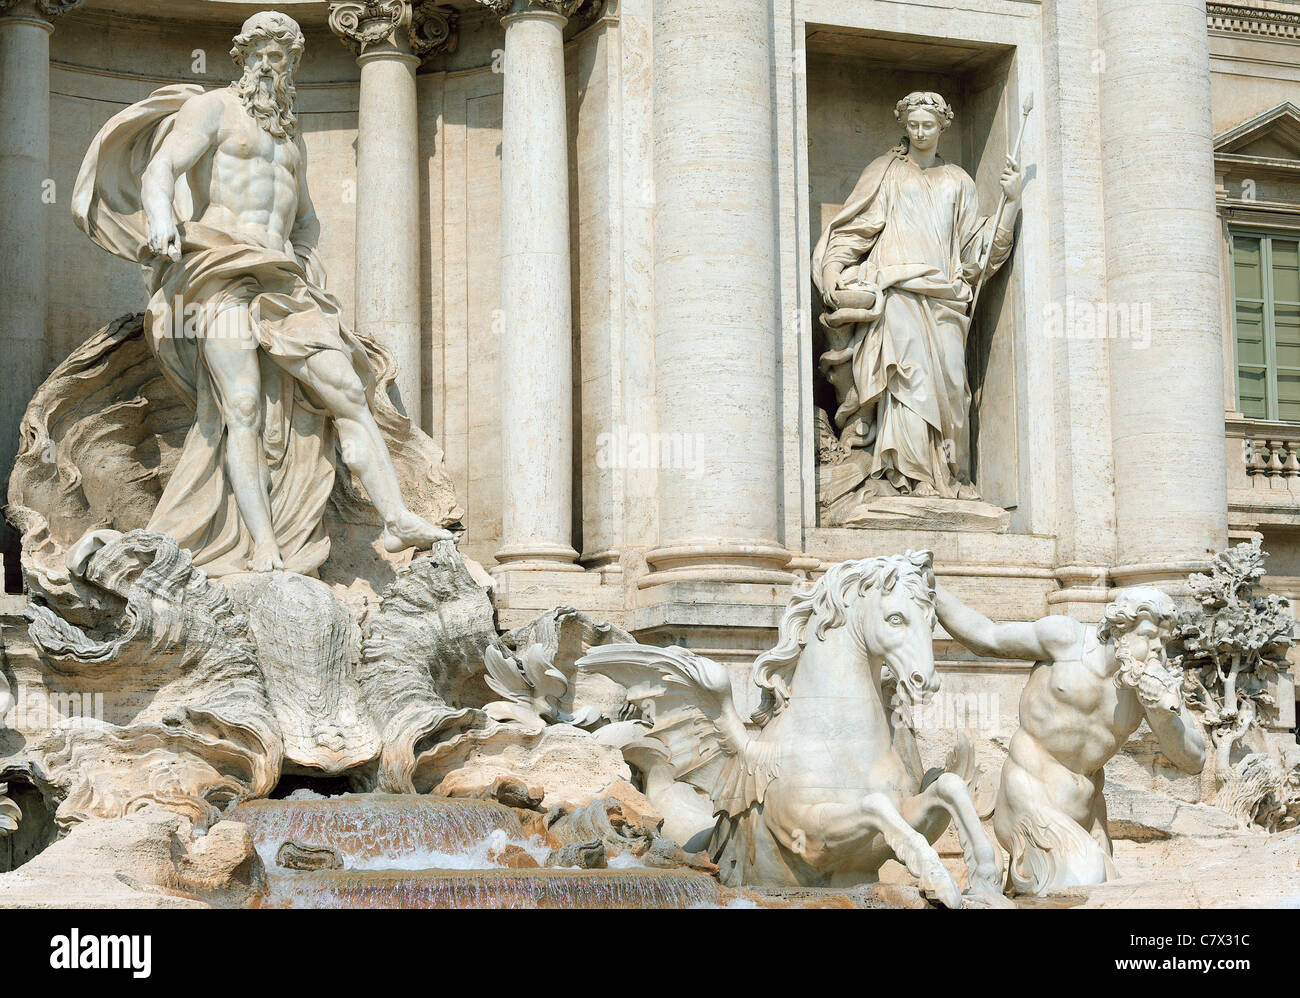 Sculptures de la fontaine de Trevi Fontana di Trevi Rome, Italie Banque D'Images